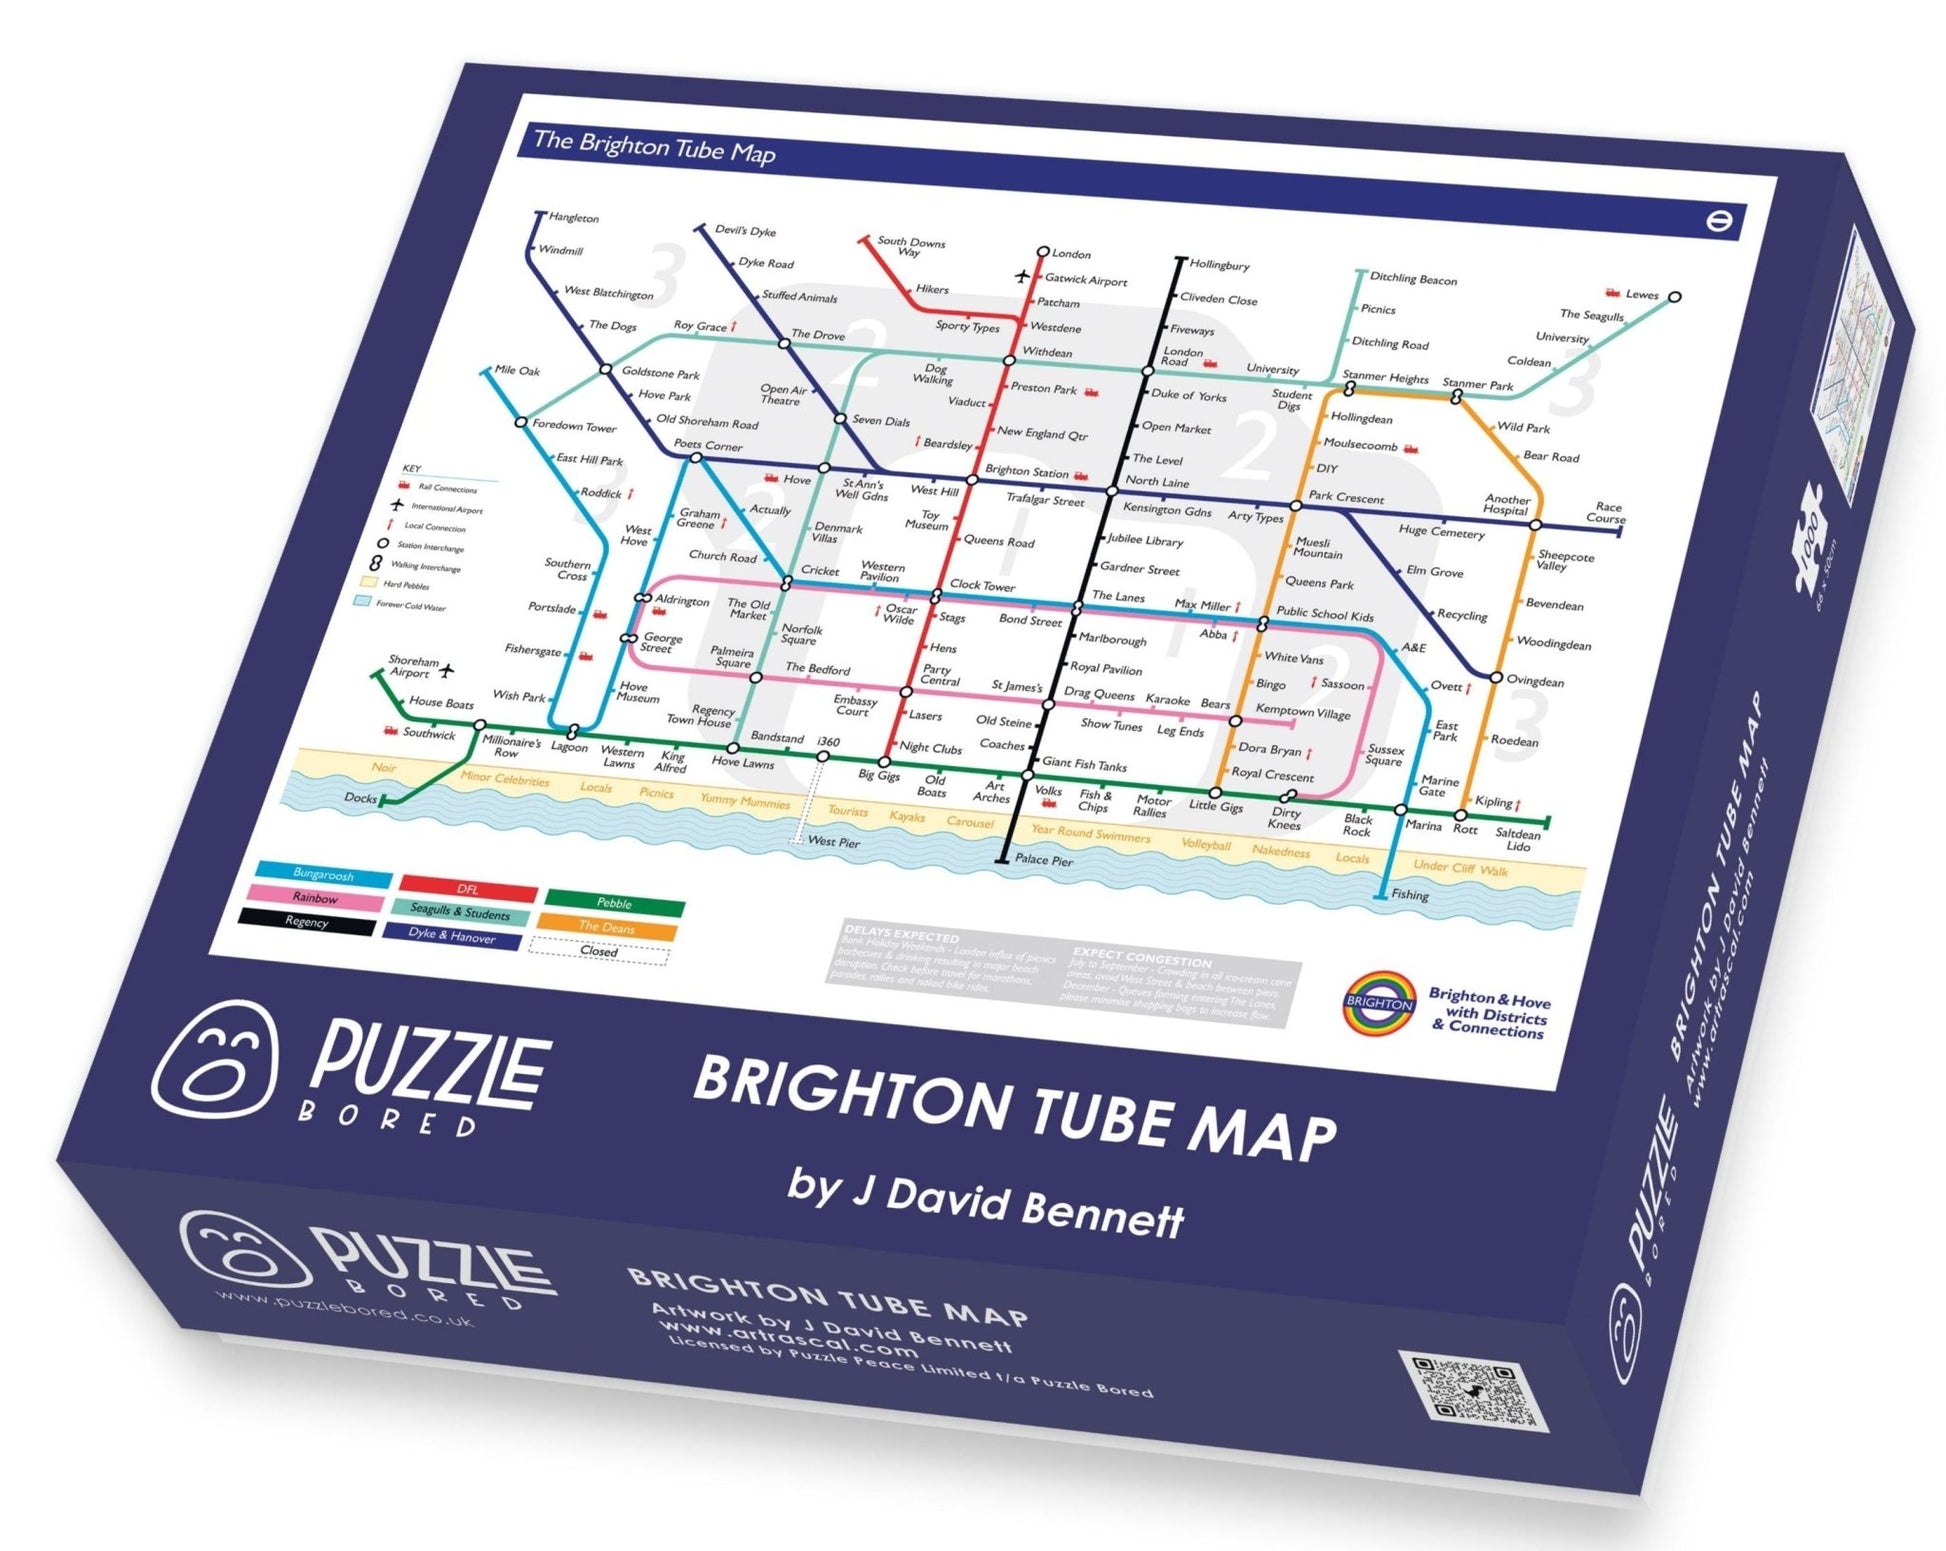 Brighton Tube Map by J David Bennett - Puzzle Bored